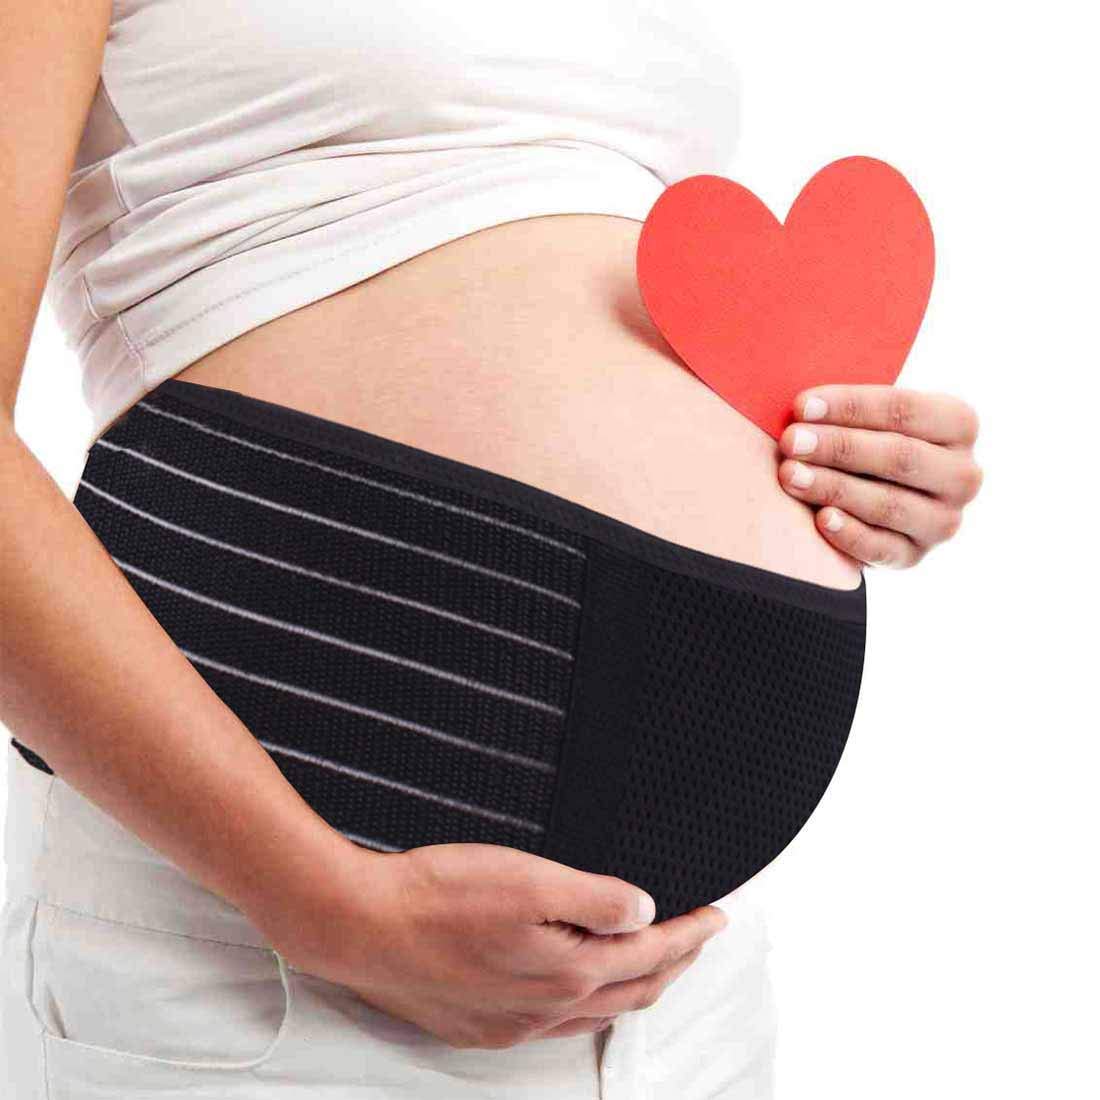 Pregnancy Support Maternity Belt Waist Back Abdomen Band Belly